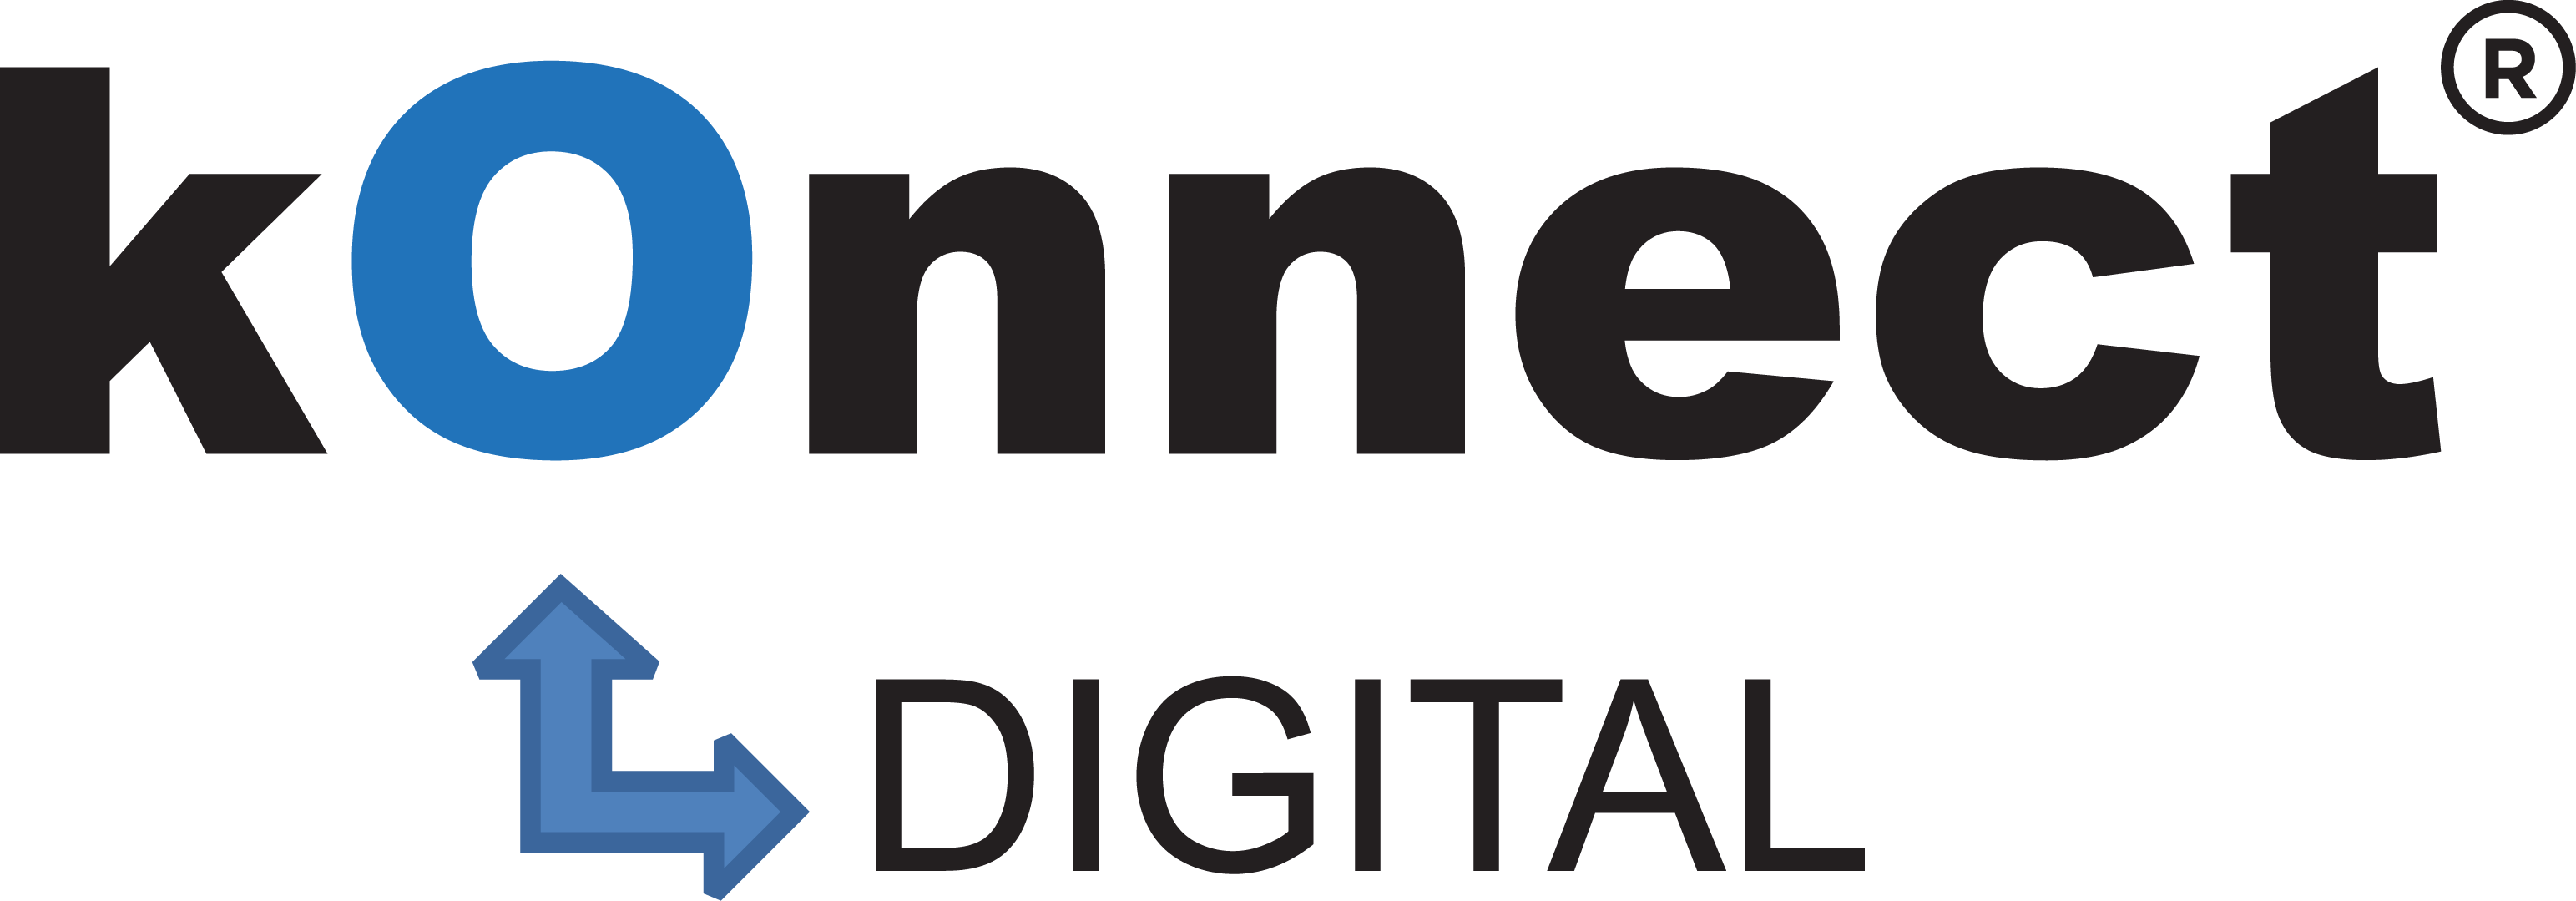 konnect digital logo